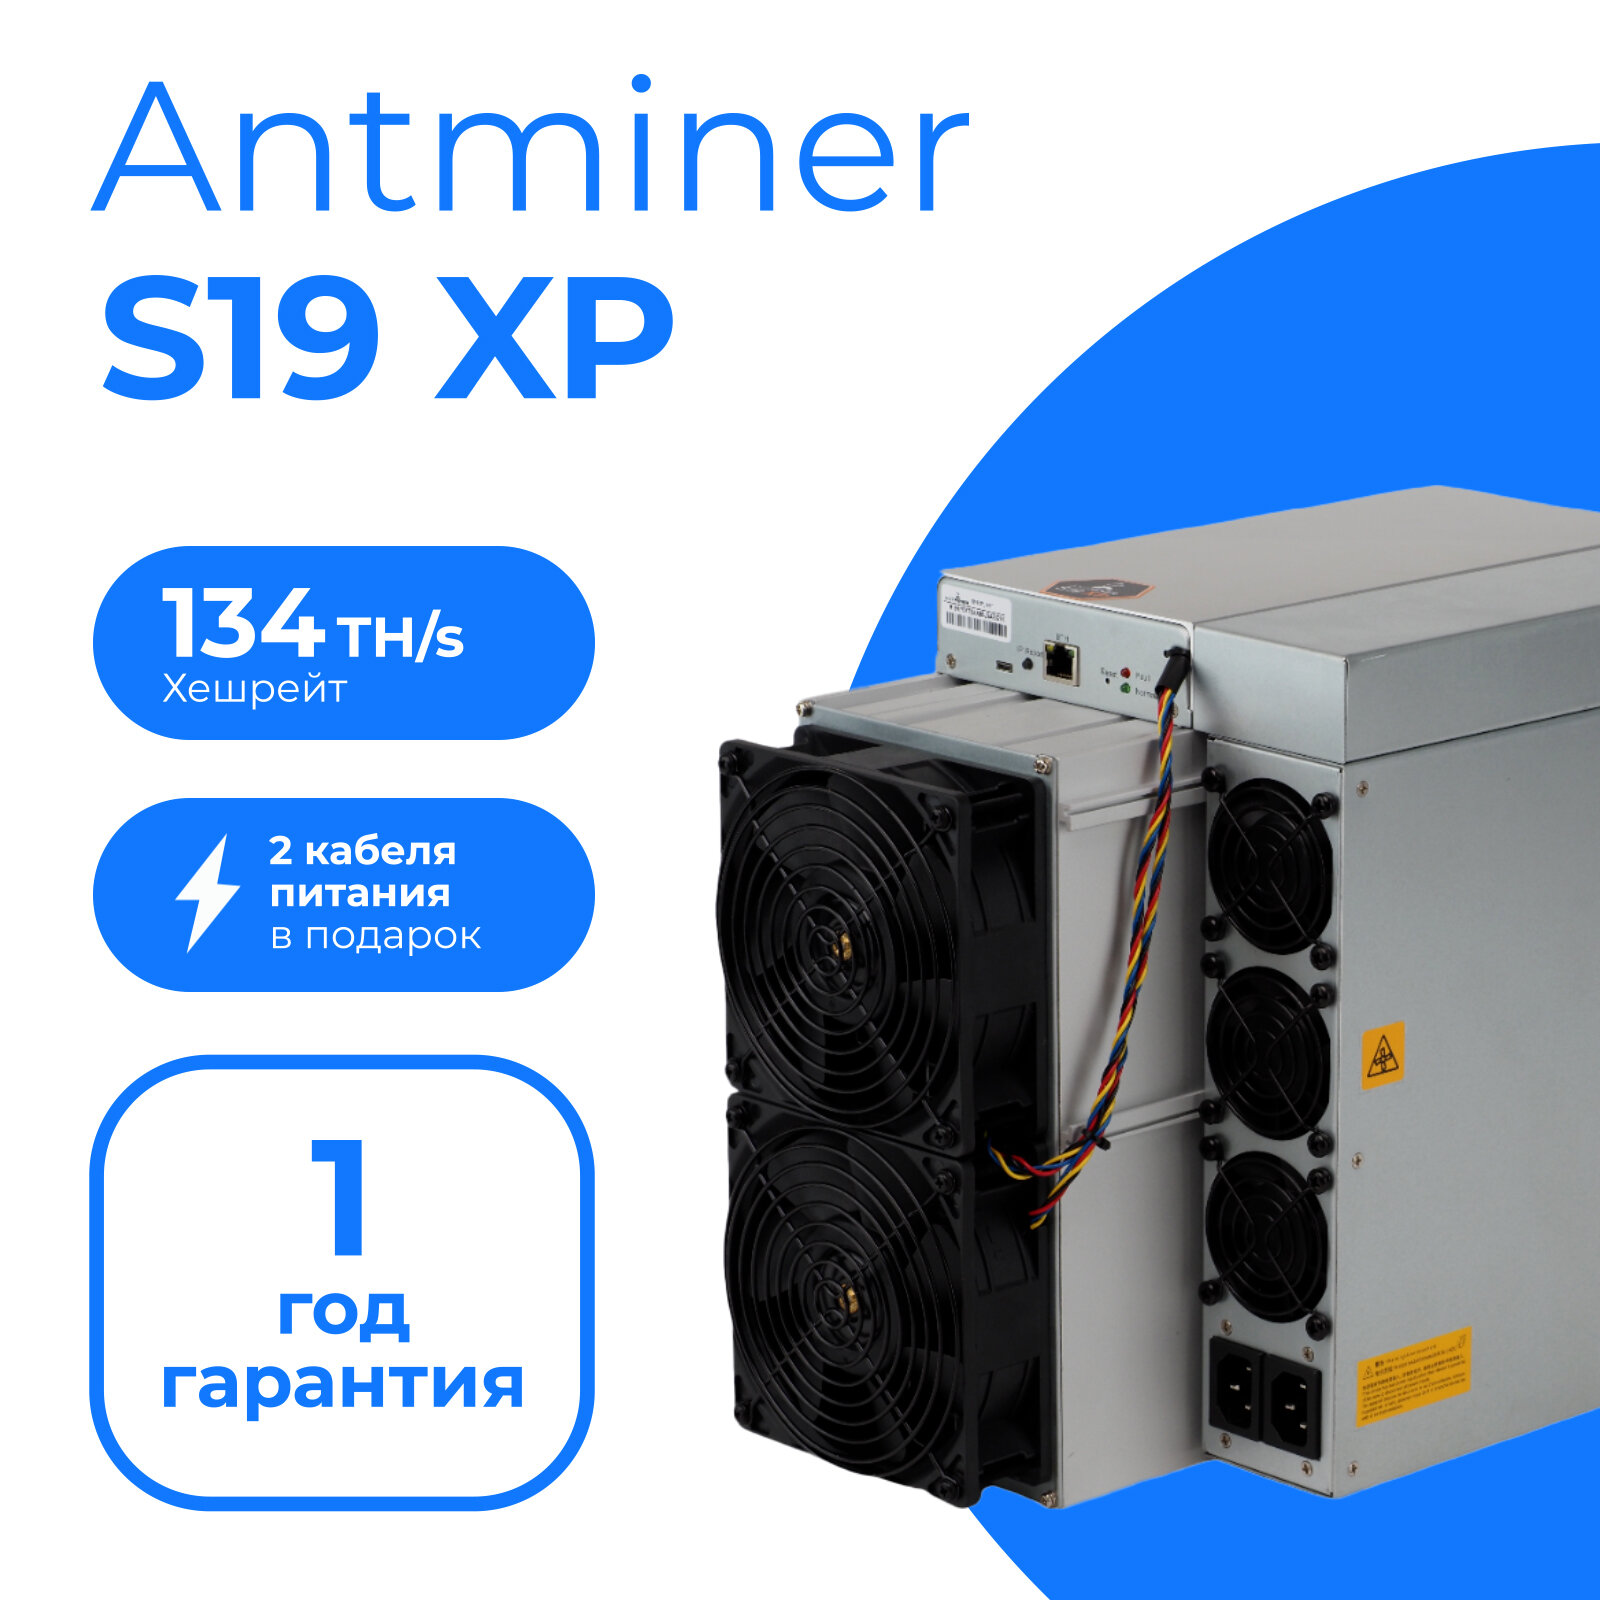 Набор Асик майнер Bitmain Antminer S19 XP 134 TH/s + 2 кабеля С13 3х15